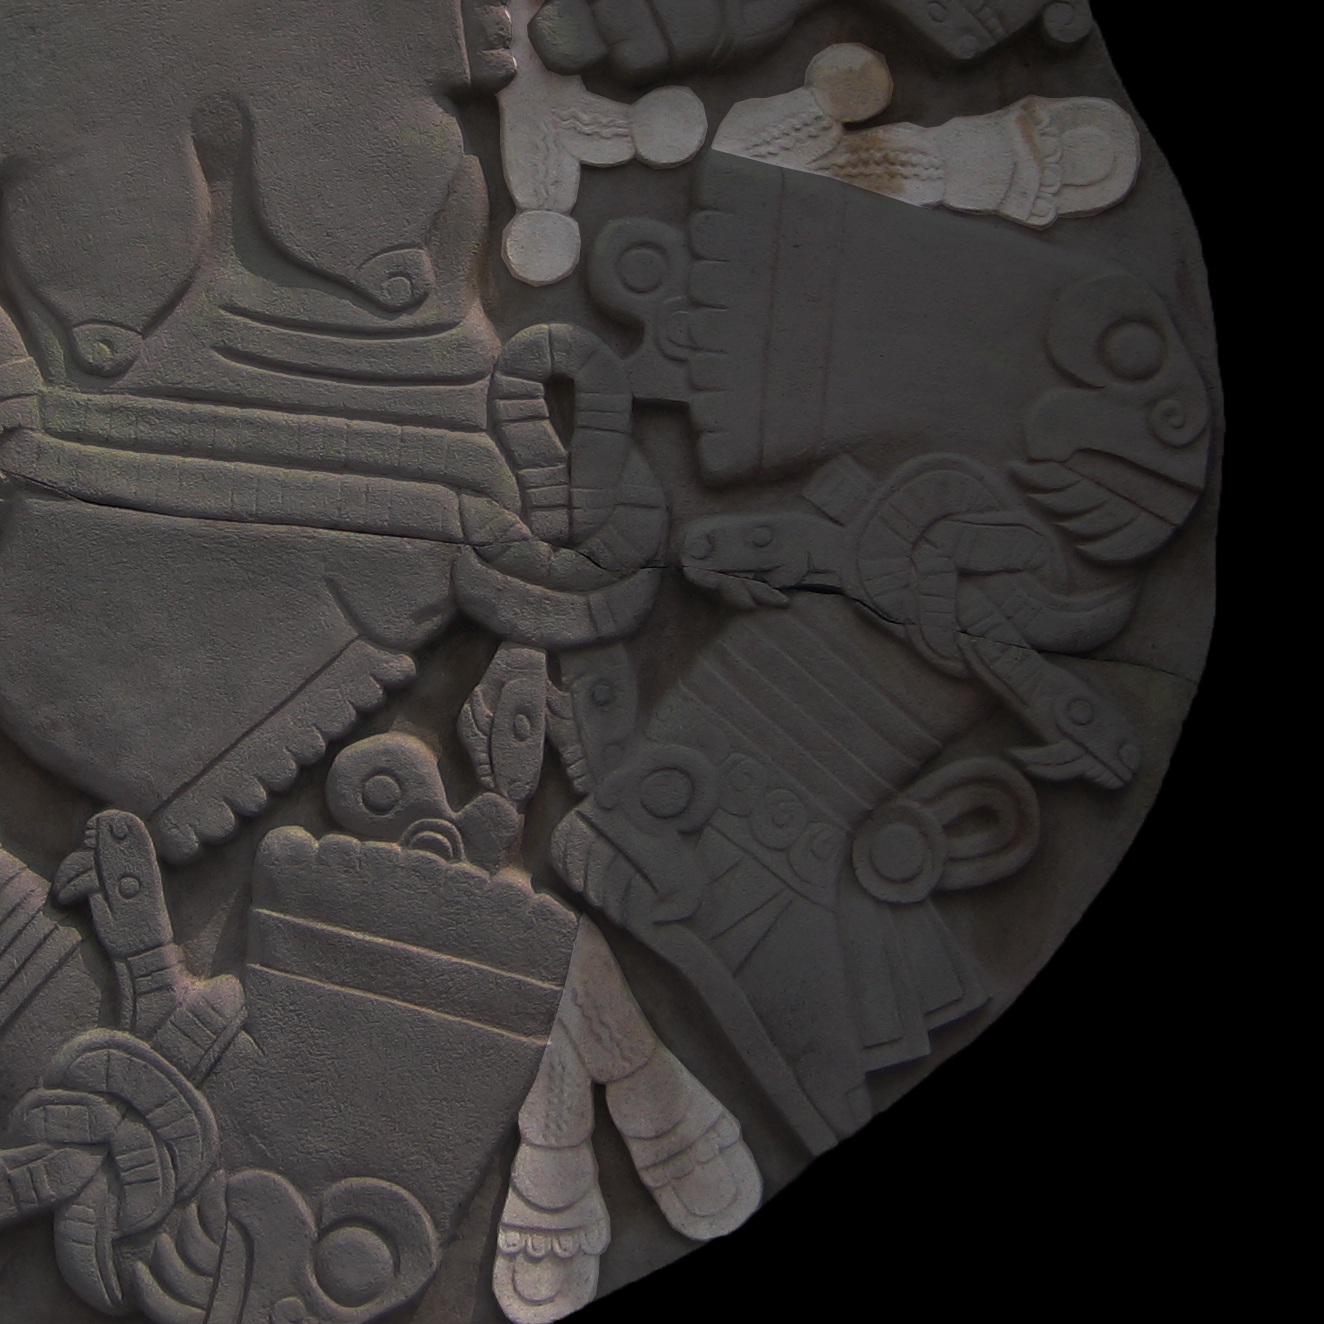 Камень Койольшауки. Фрагмент. Ацтеки, примерно 1473 г. н.э. Коллекция Museo del Templo Mayor, Mexico. Tatiana Shulikova, 2007.